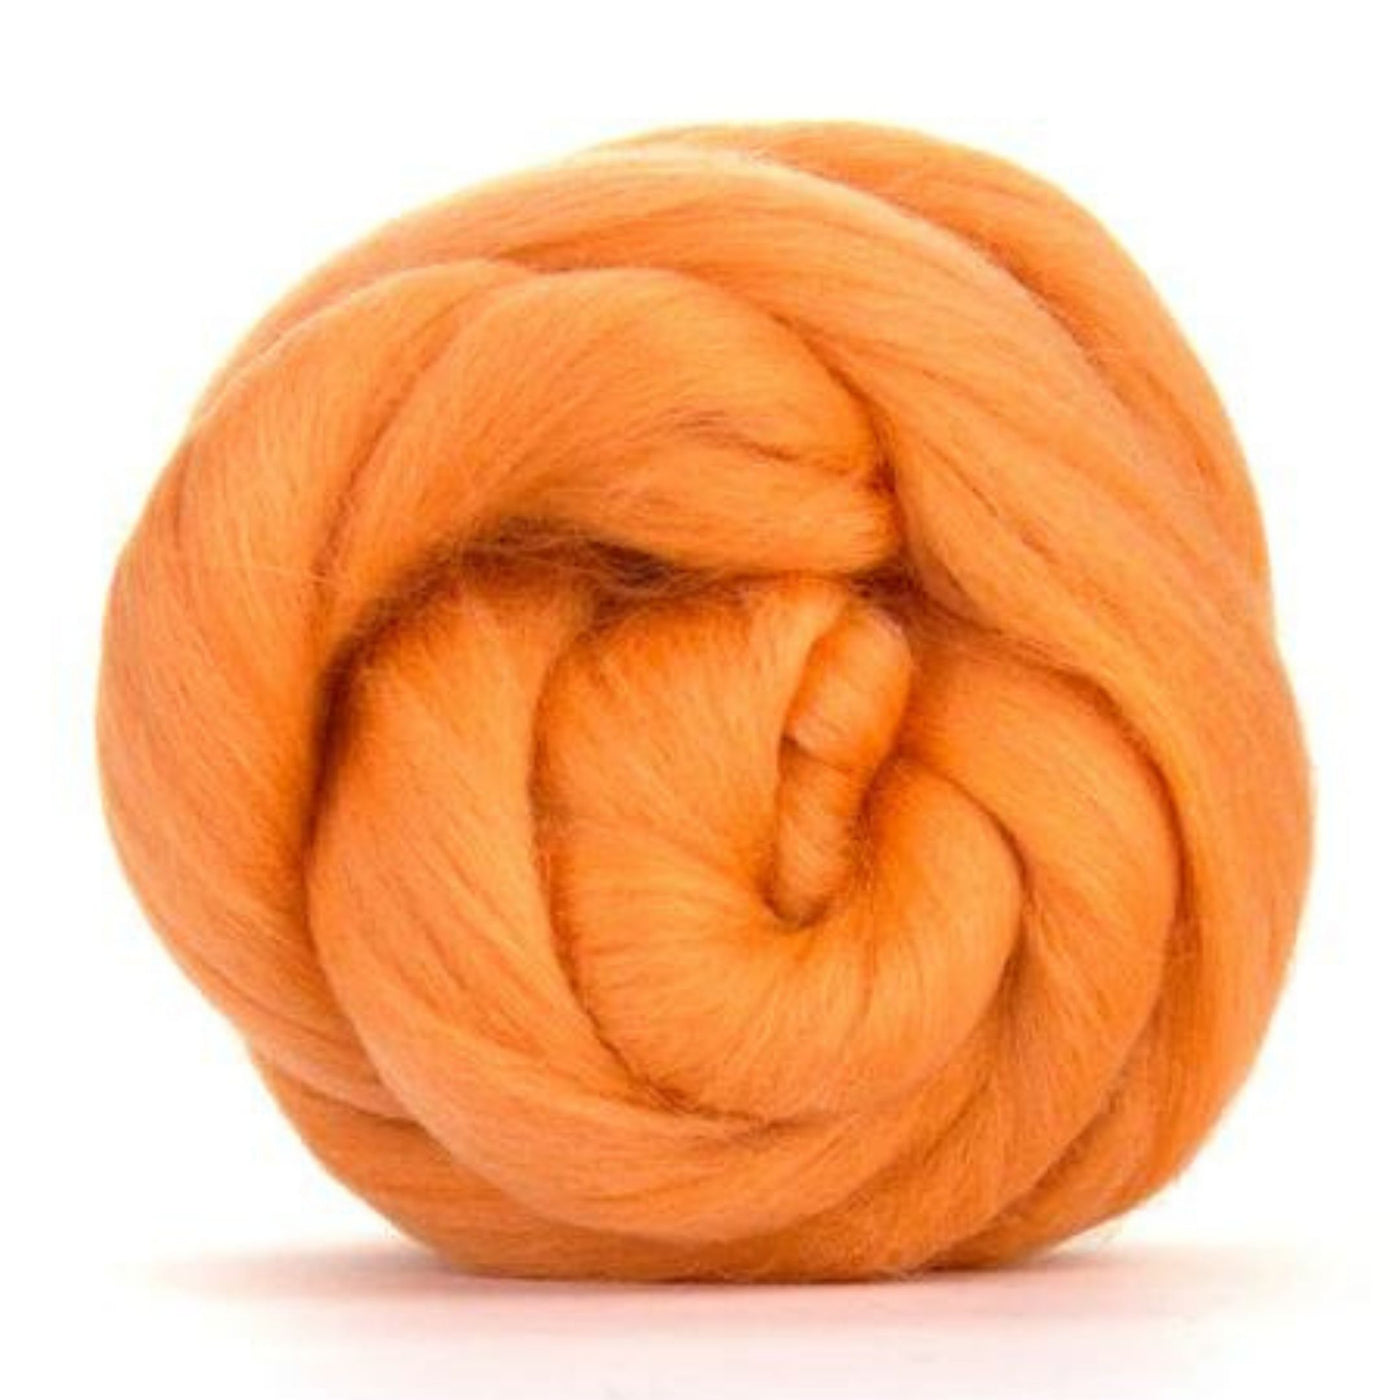 MERINO Wool Roving Spinning Wool, Felting Wool Super Soft Wholesale Natural  White Wool Top Roving Fiber, Chunky Knit Blanket, Spin, Weave 